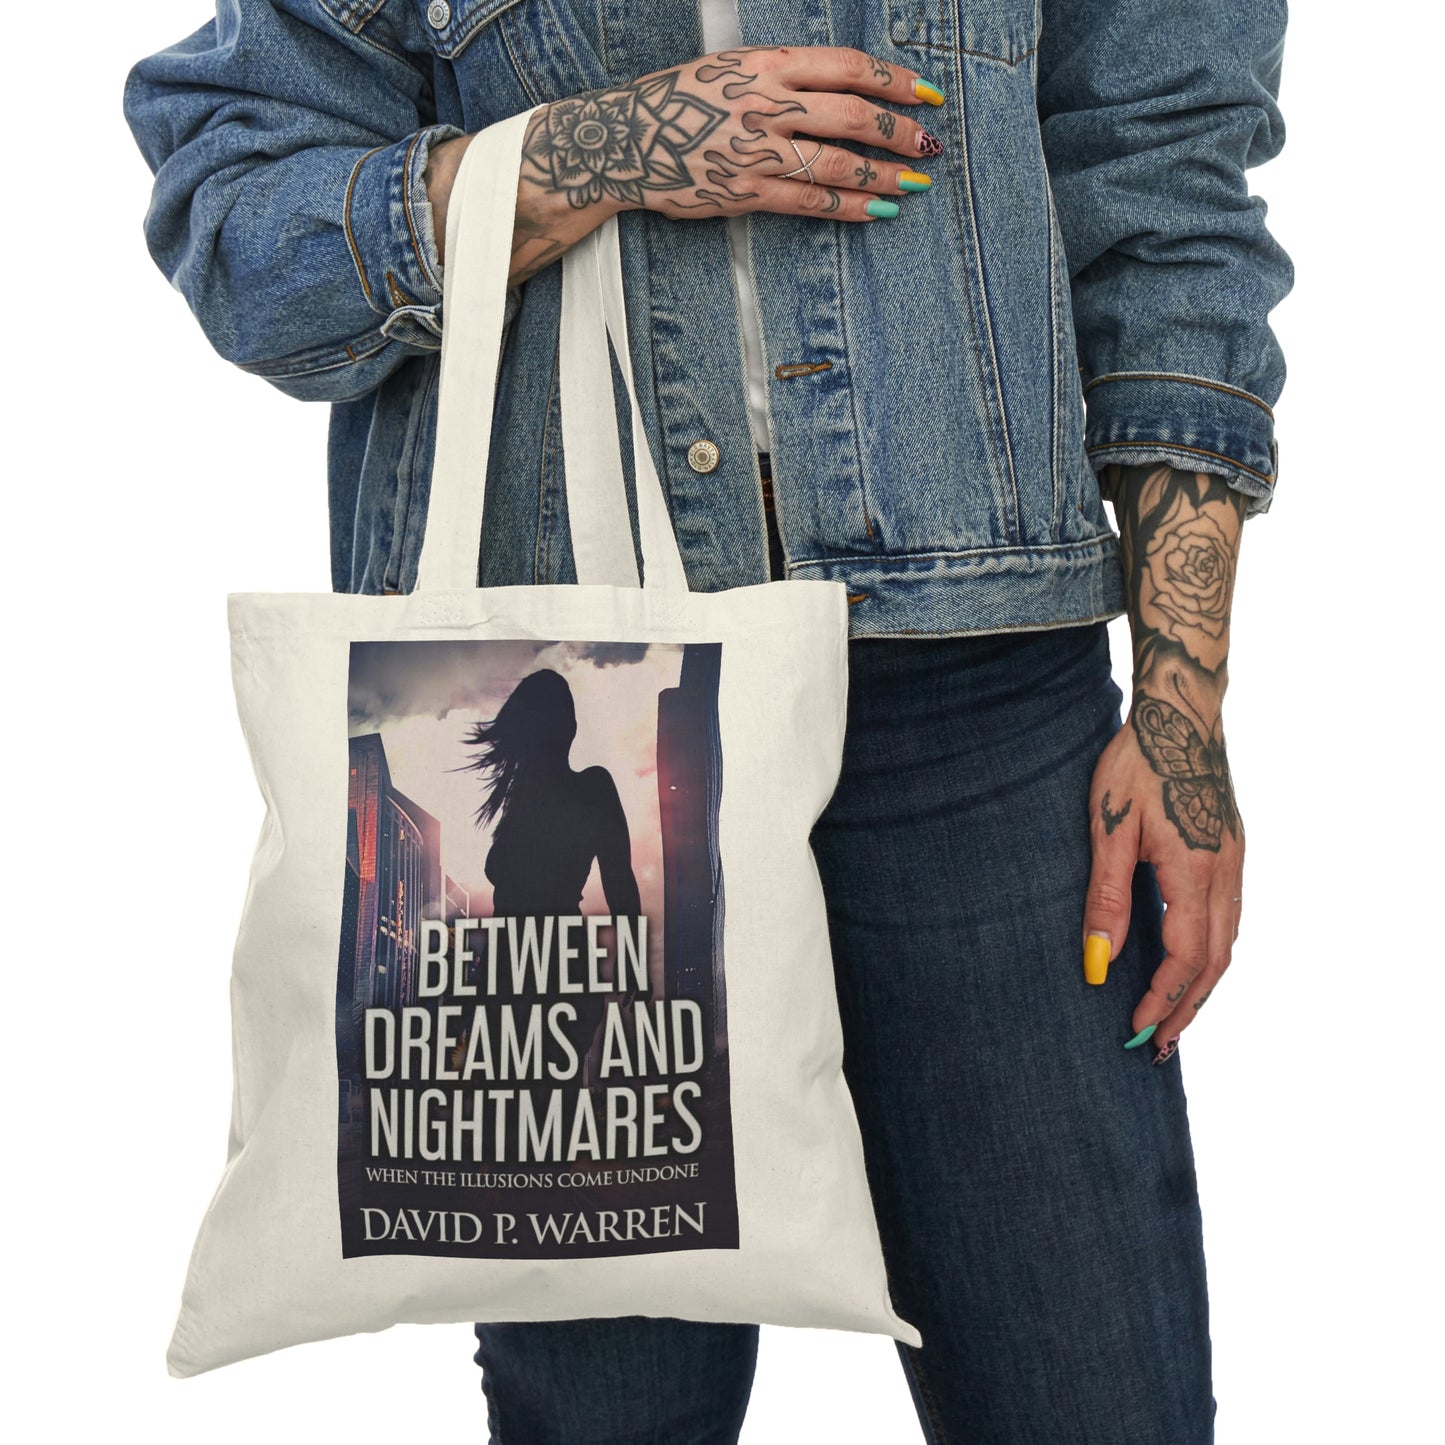 Between Dreams and Nightmares - Natural Tote Bag